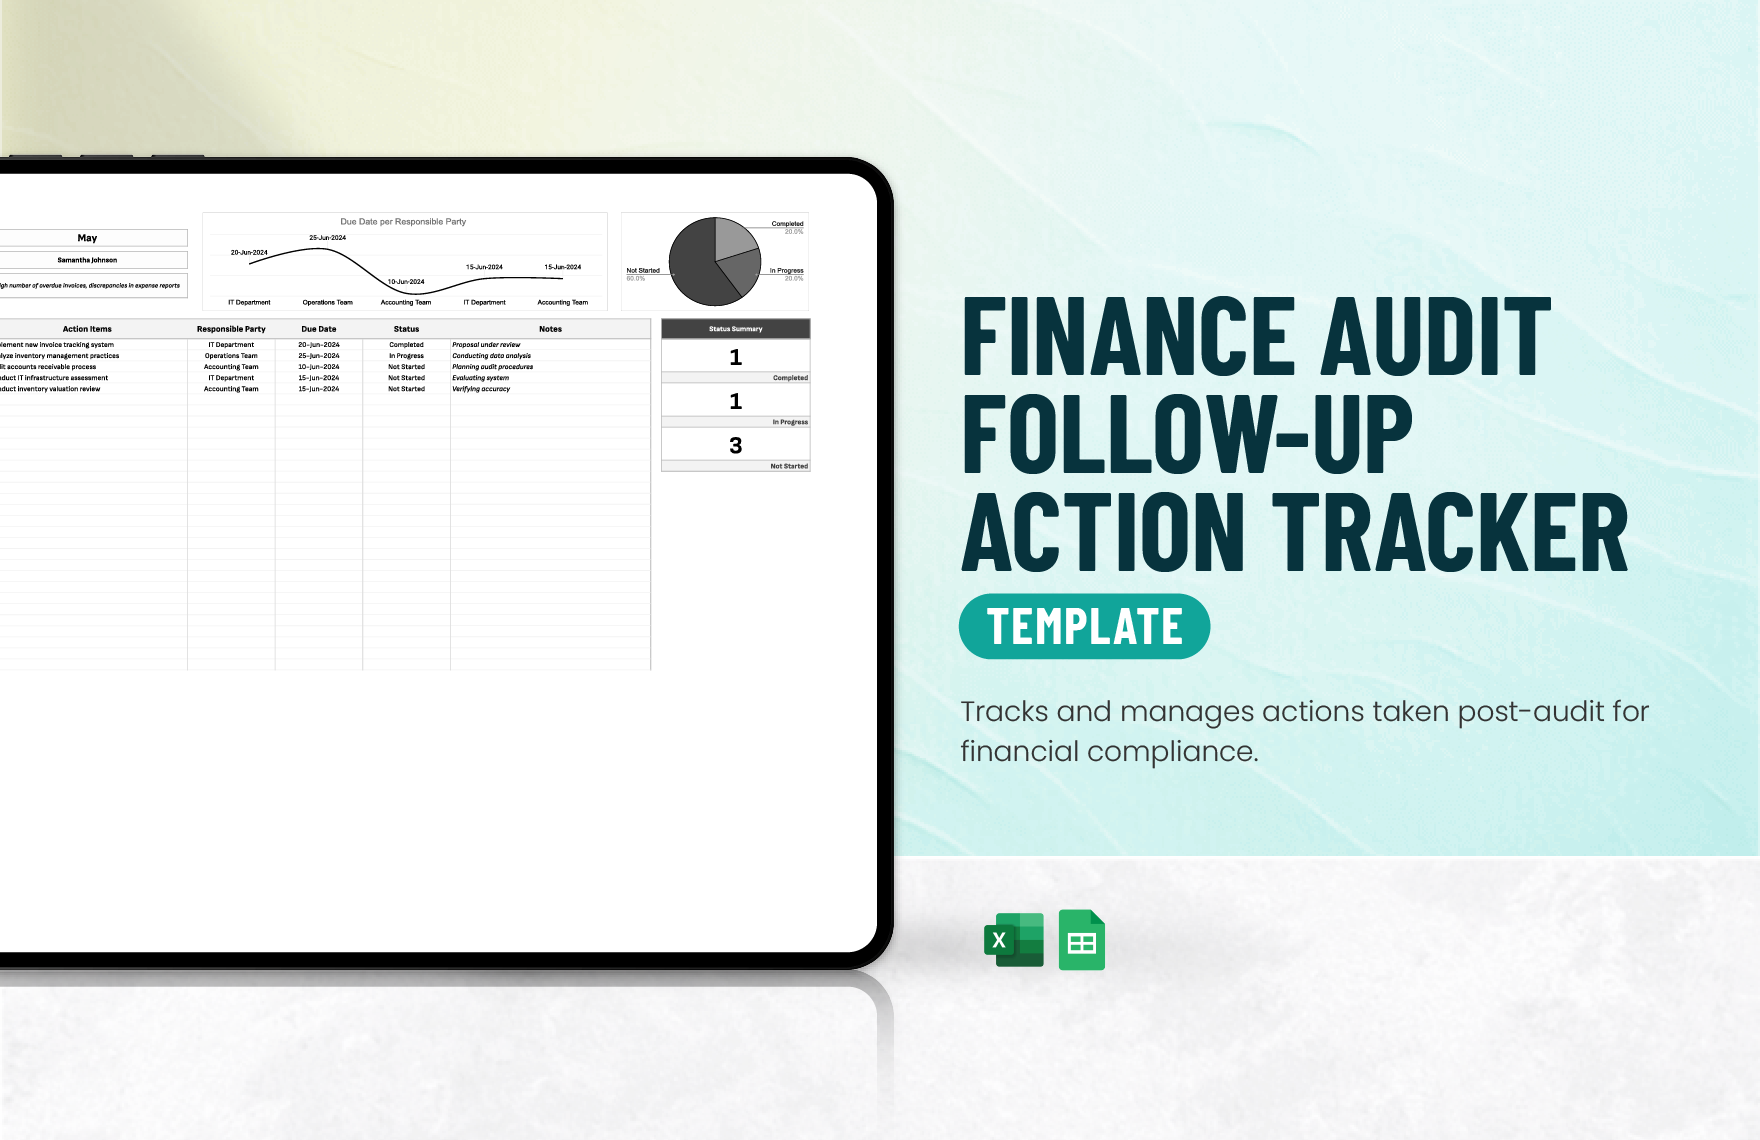 Finance Audit Follow-Up Action Tracker Template